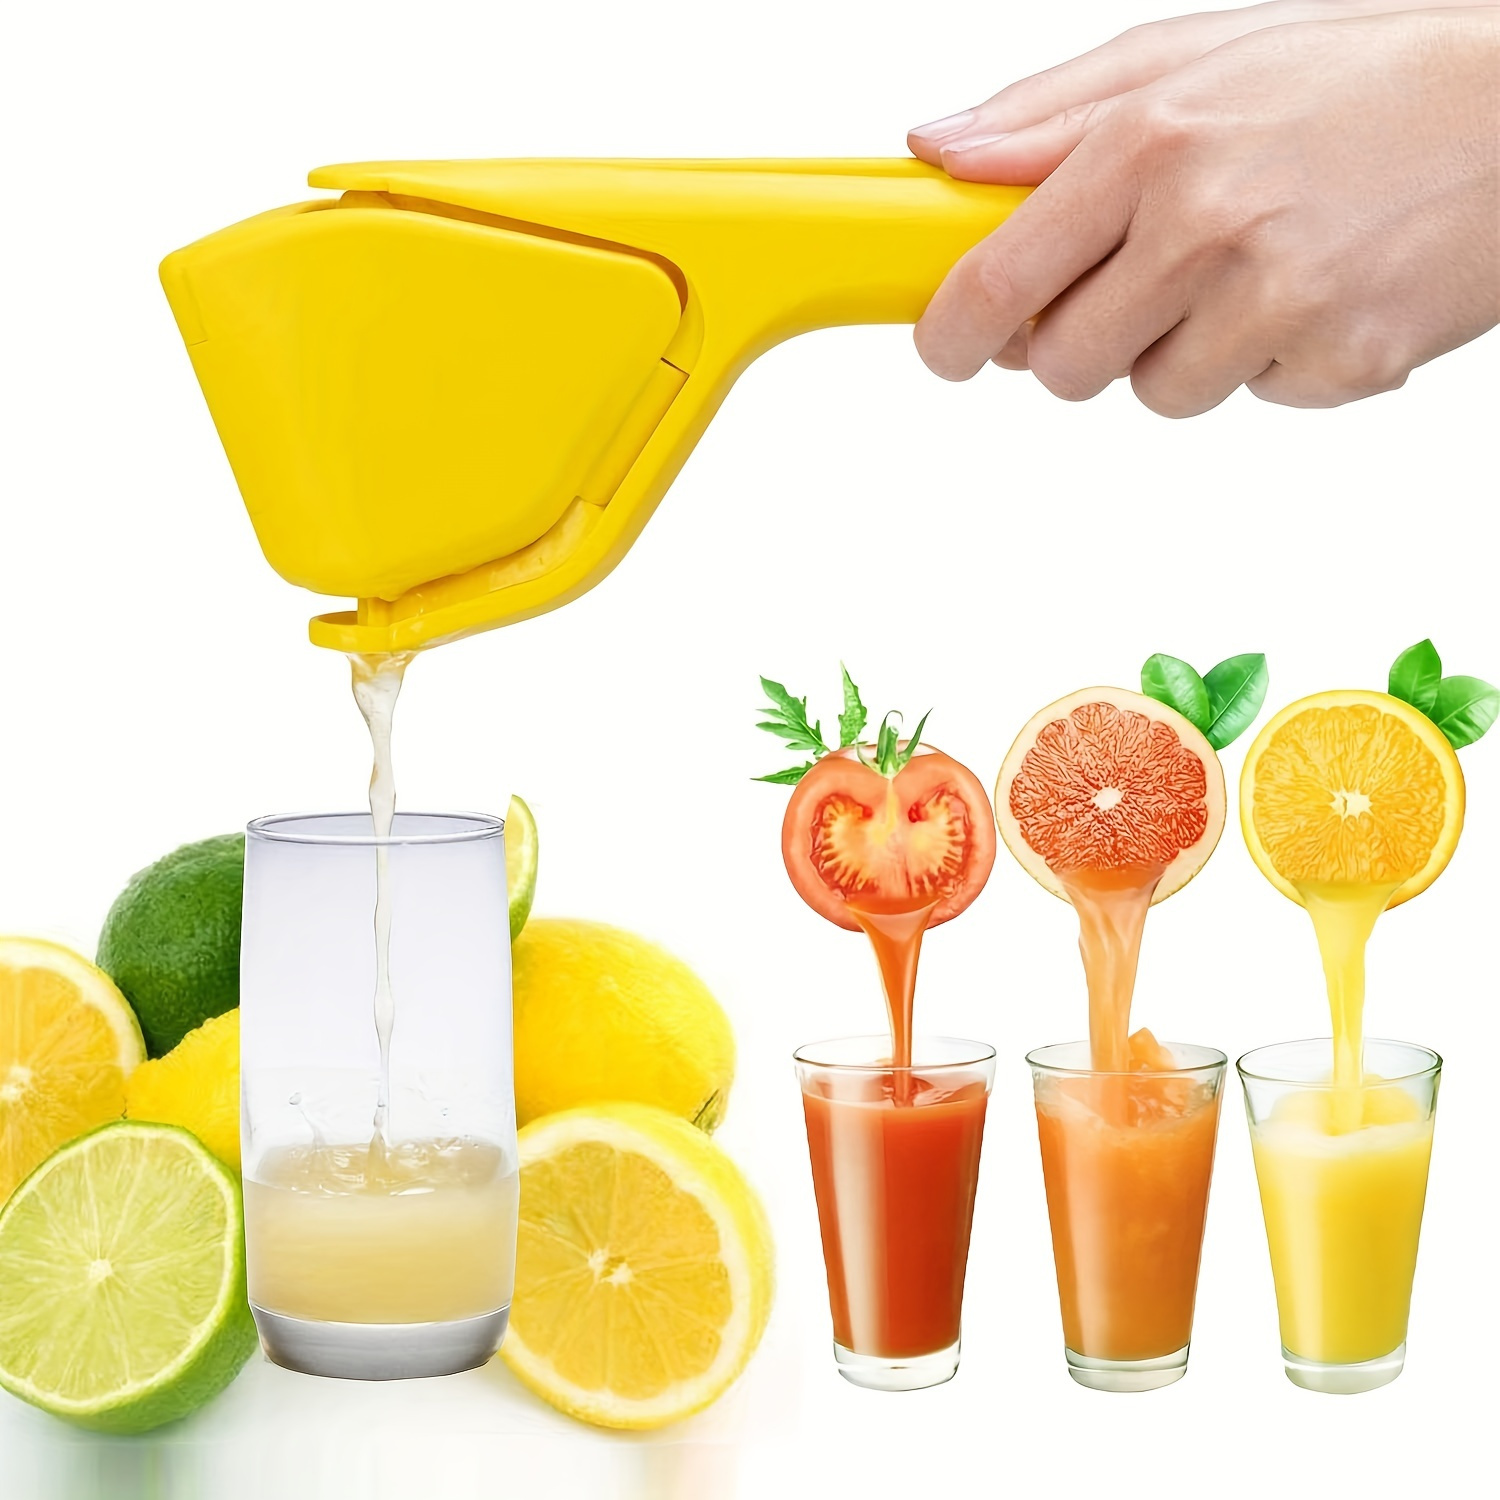 JAMOR Manual Juicer,Lemon Juicer,Small Citrus Juicer,Manual Rotary